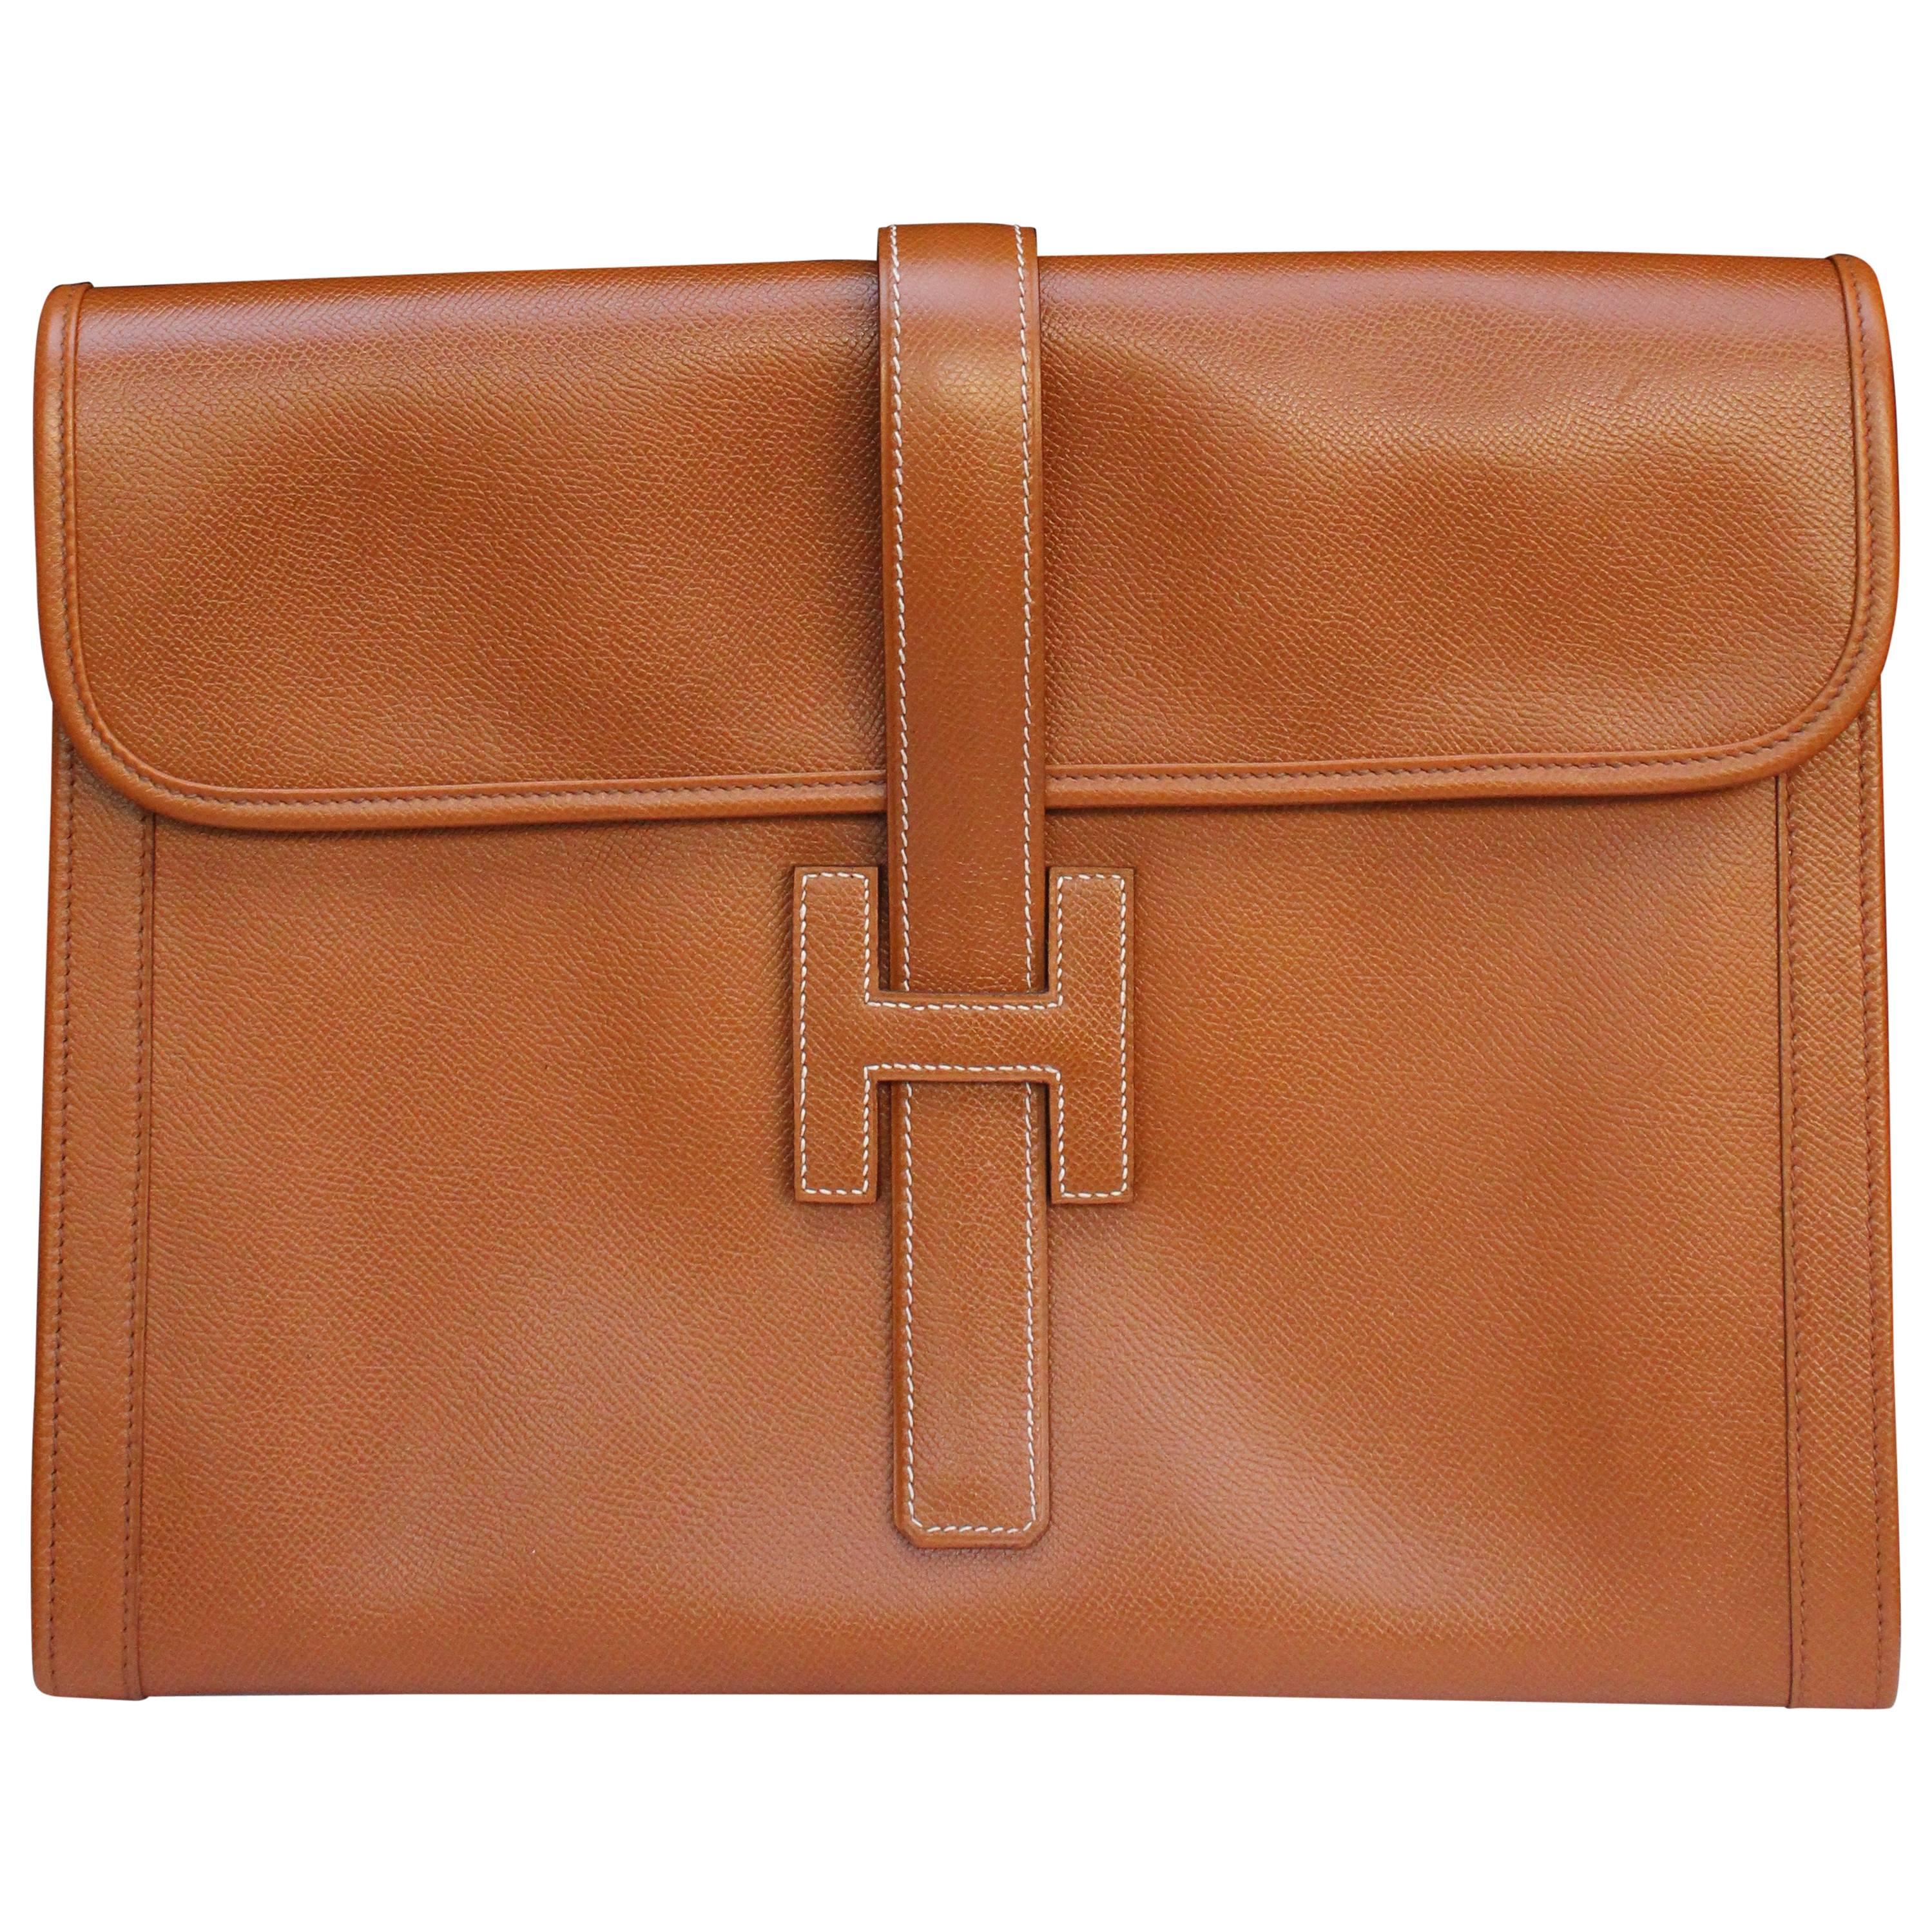 Hermès “Jige” model clutch in tan togo leather